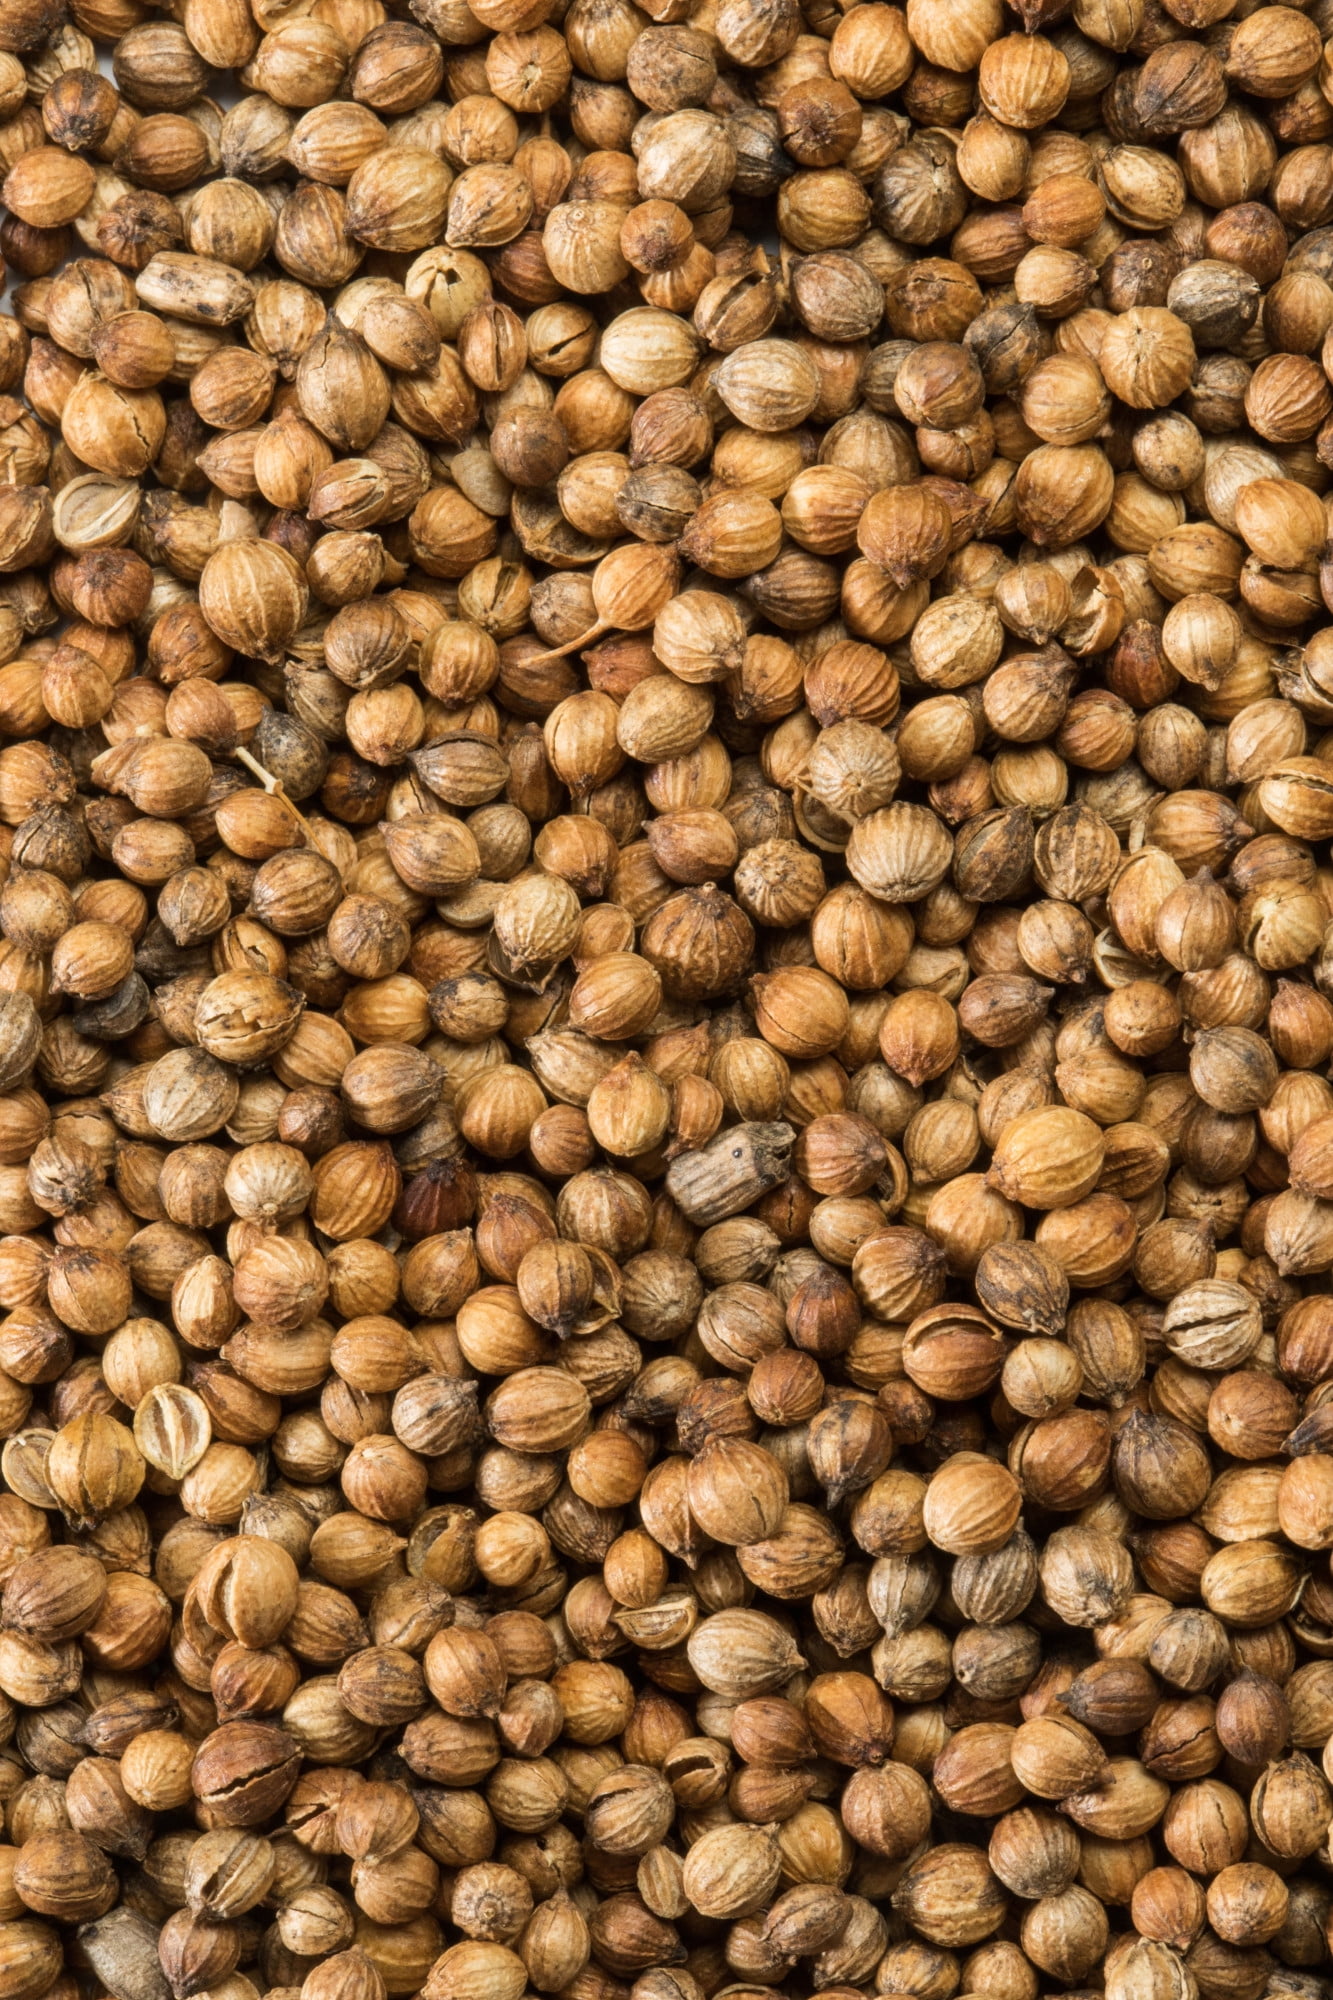 McCormick Gourmet Organic Coriander Seed, 0.87 oz Mixed Spices & Seasonings - image 4 of 11